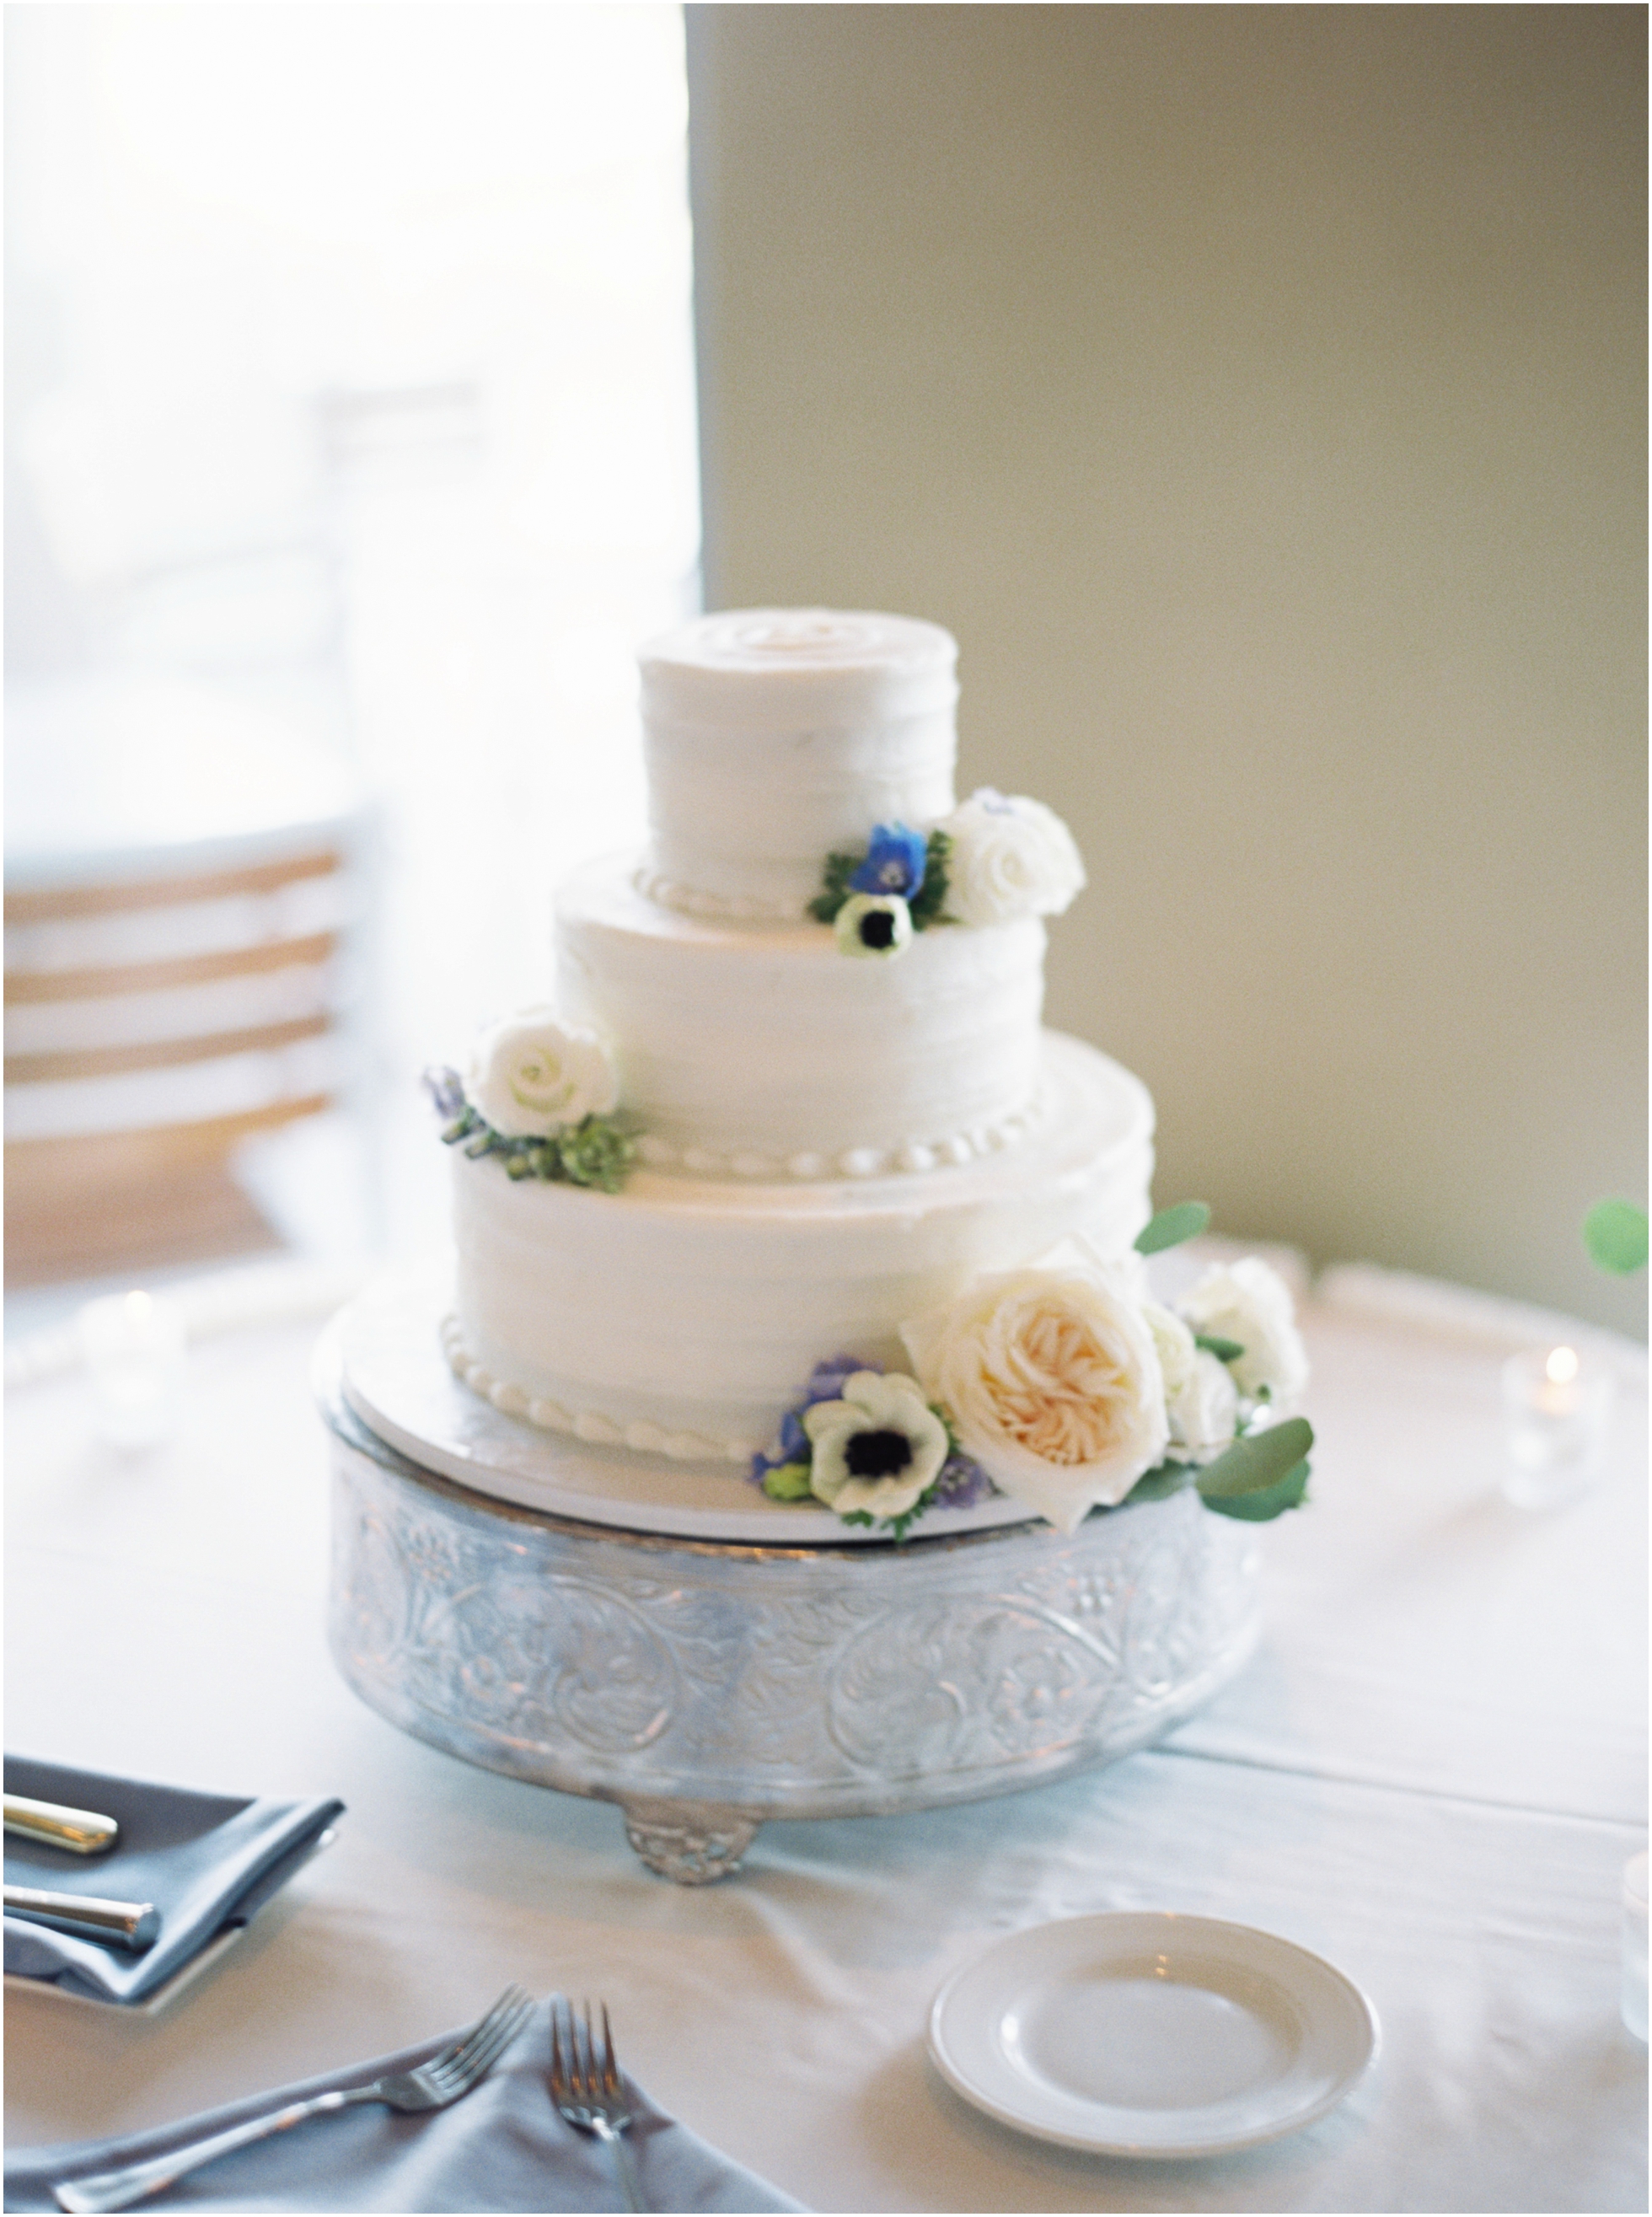 Sarasota wedding cake